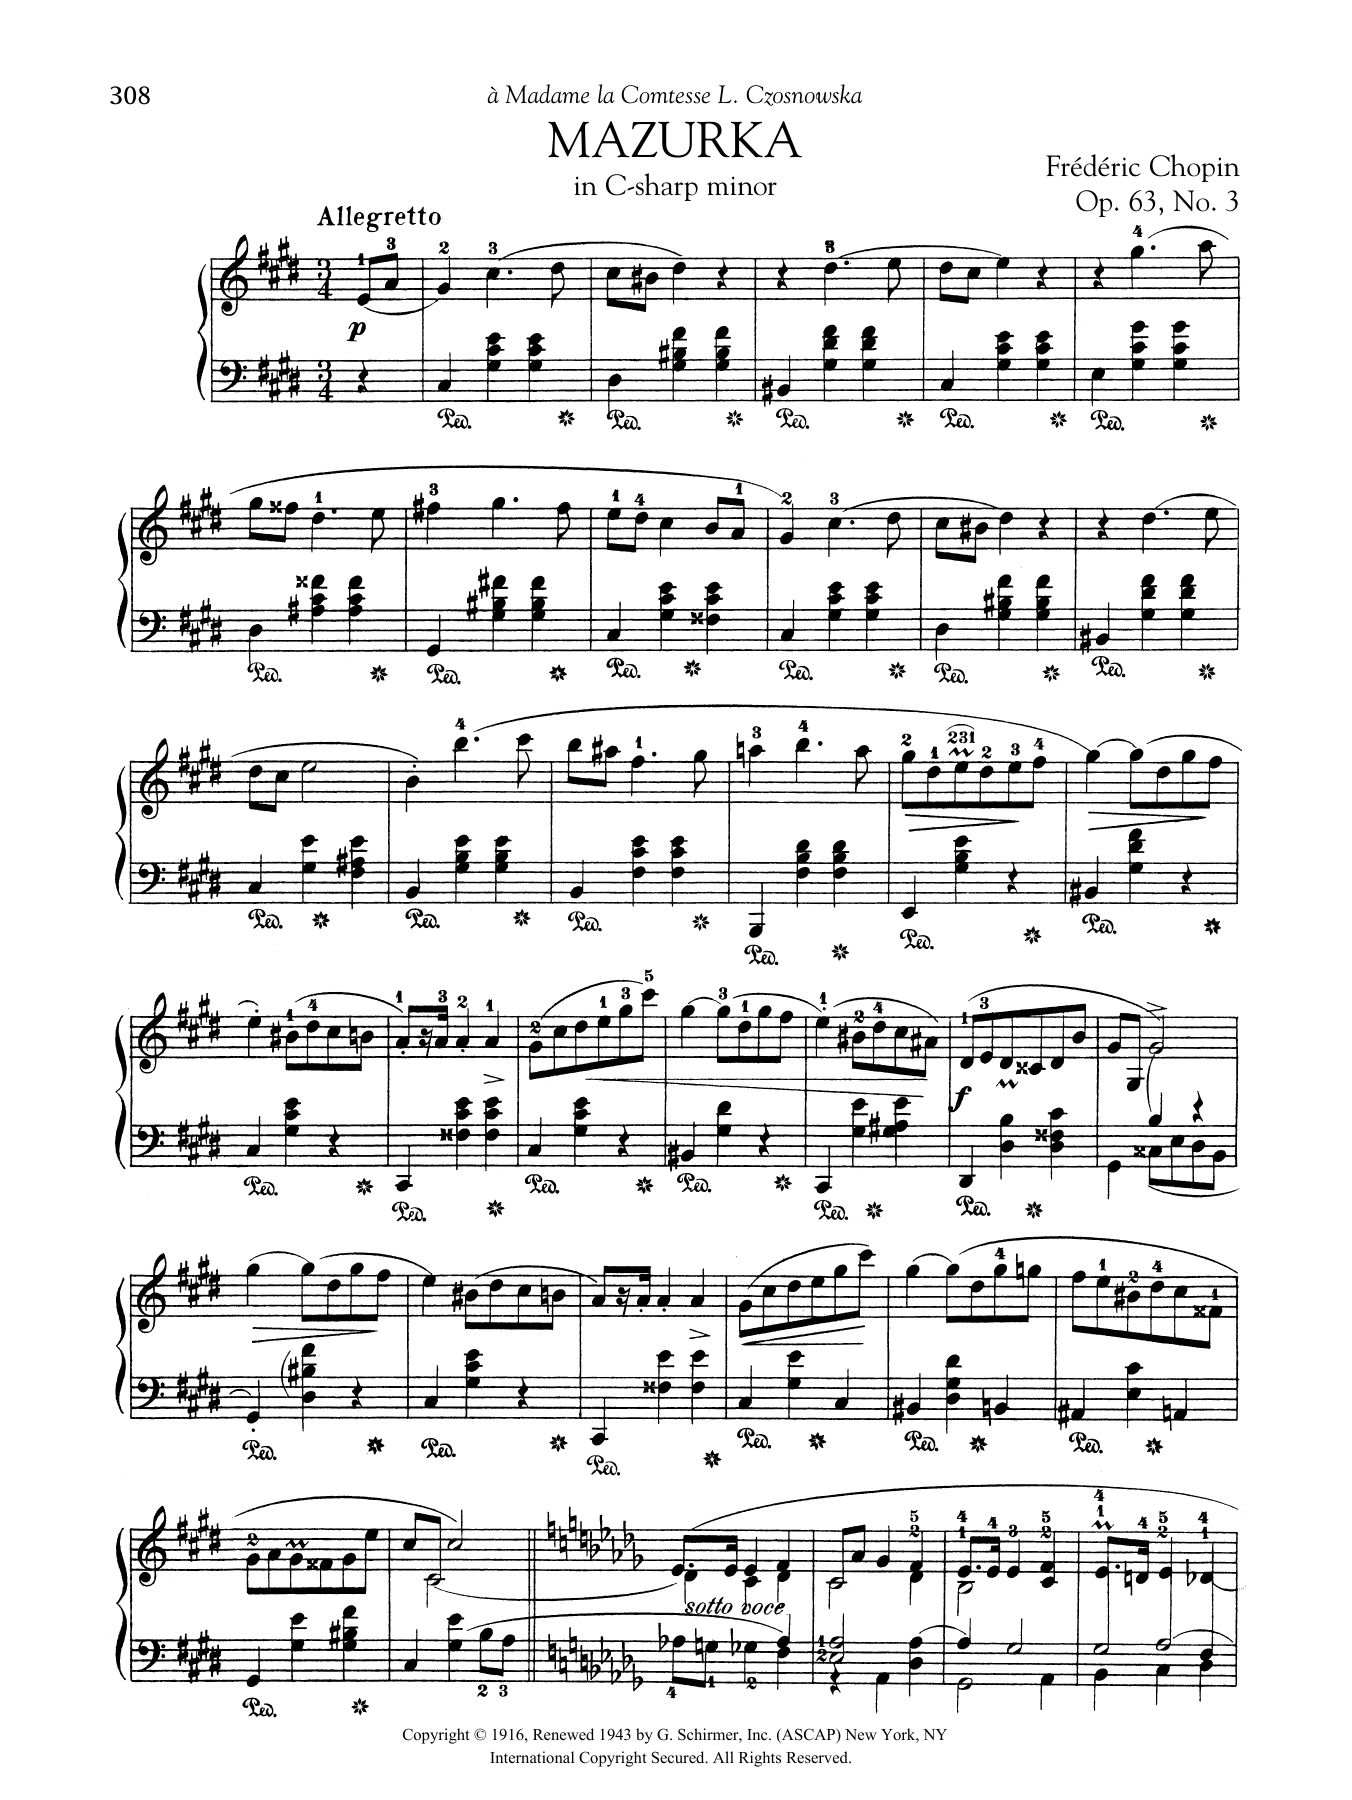 Download Frederic Chopin Mazurka In C-sharp minor, Op. 63, No. 3 Sheet Music